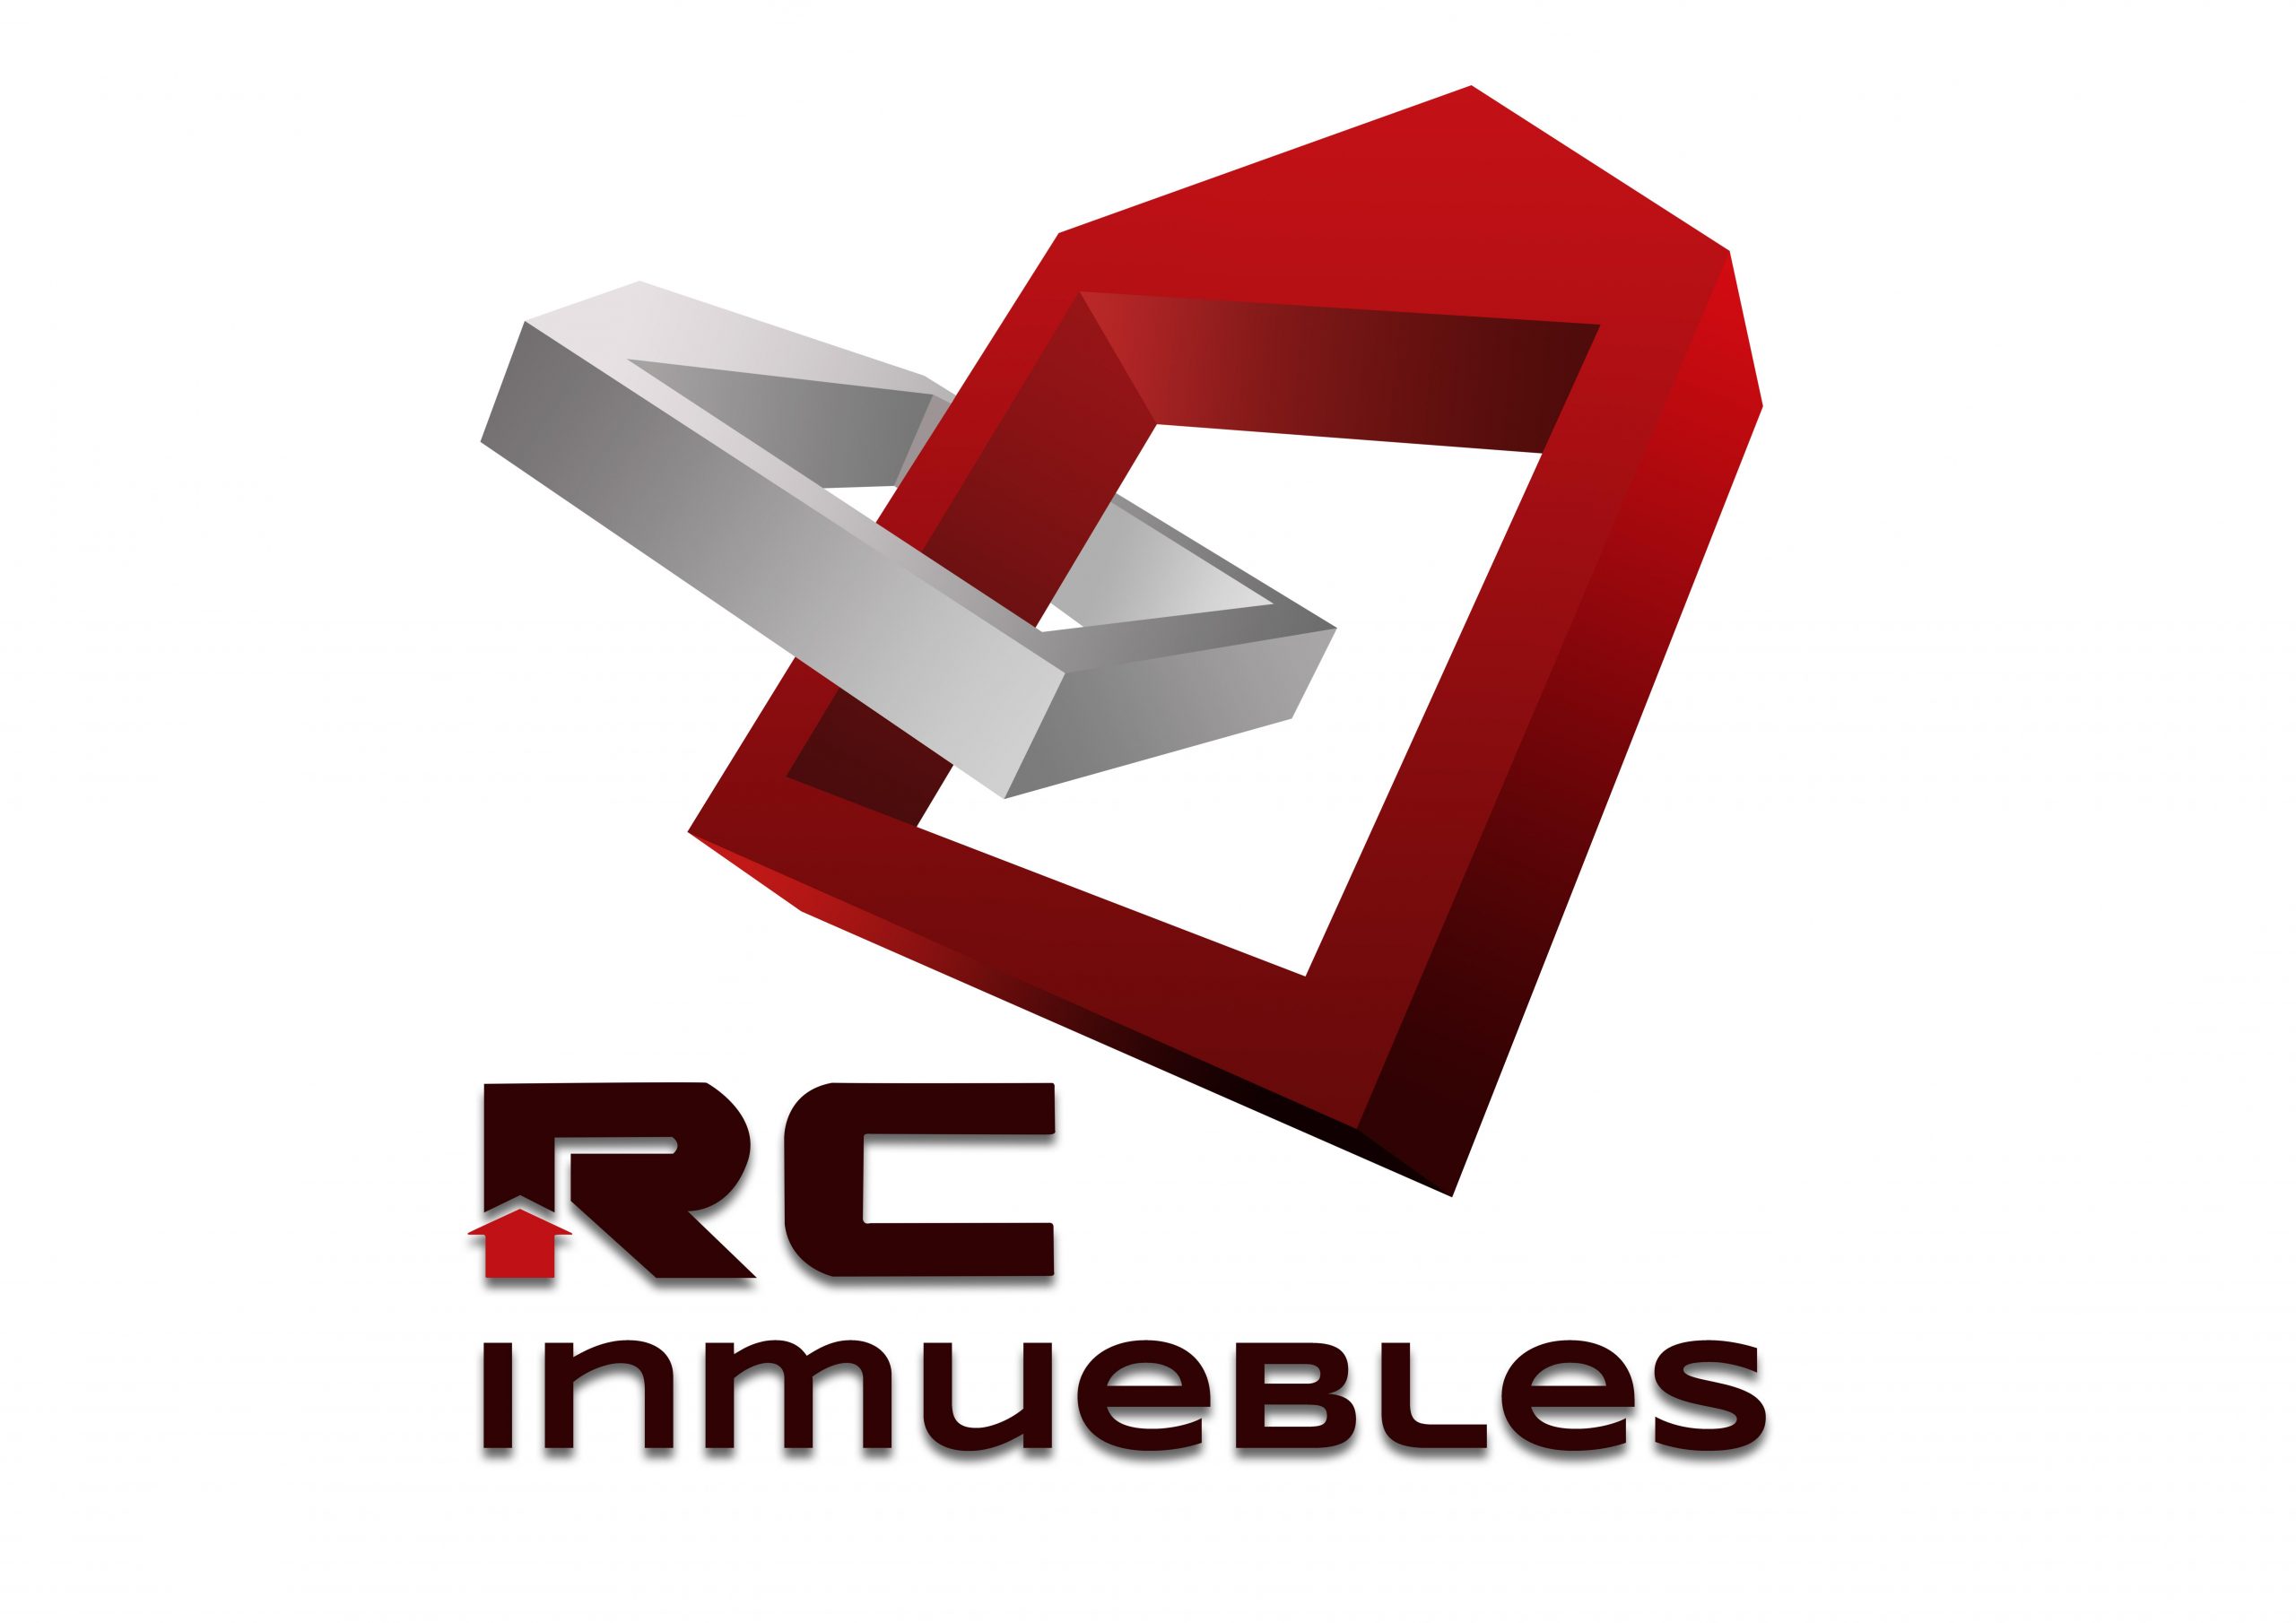 RC Inmuebles